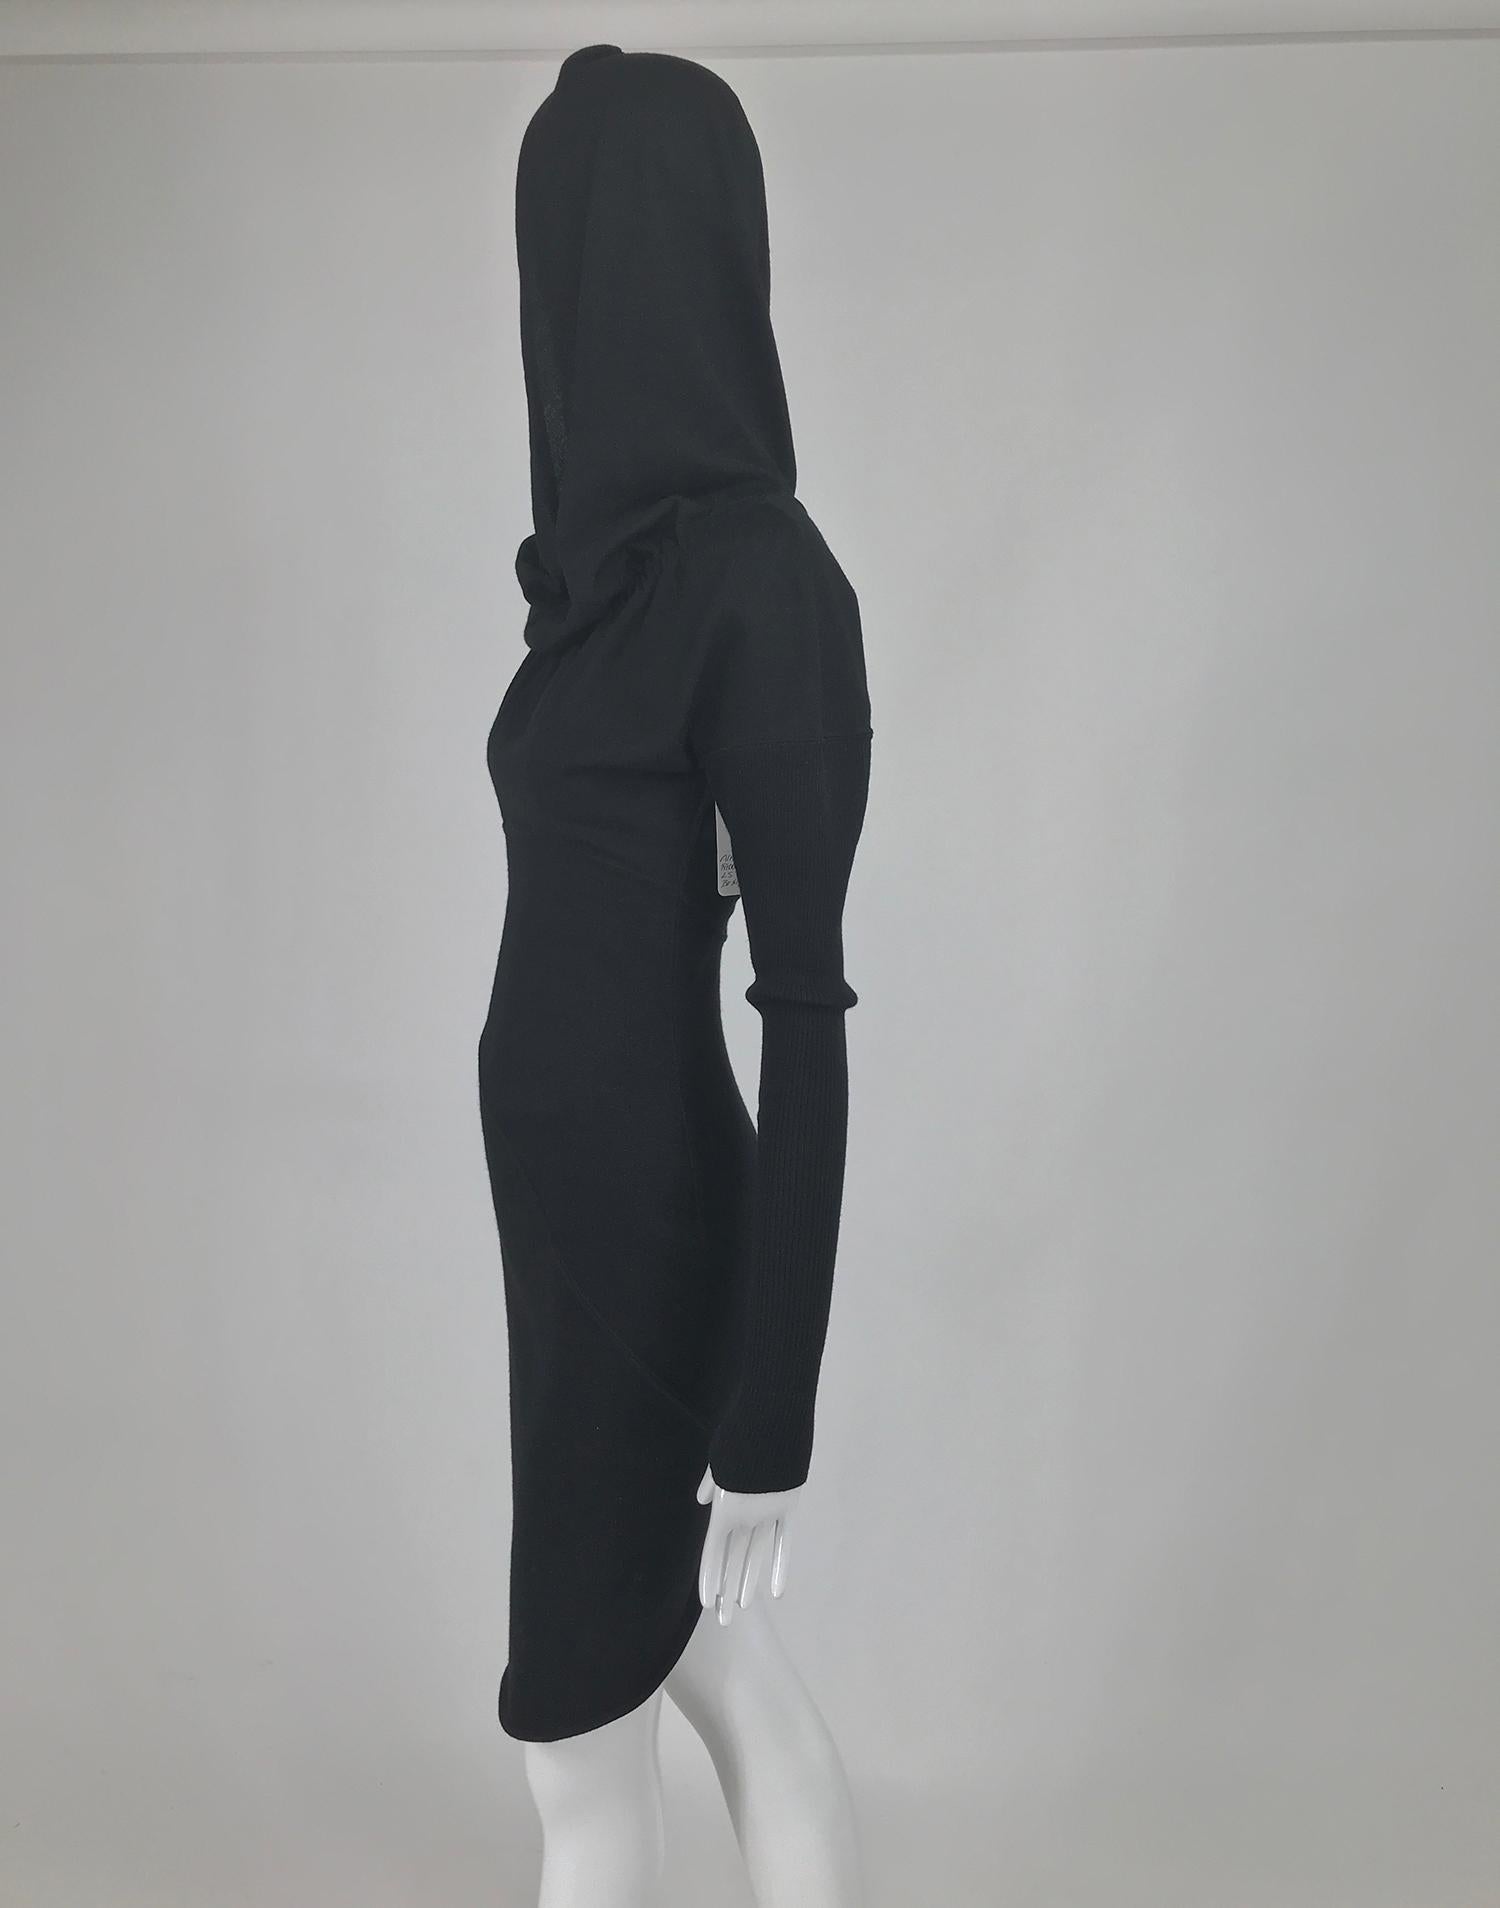 Azzedine Alaïa Black Wool Knit Hooded Body Con Dress 1980s 1